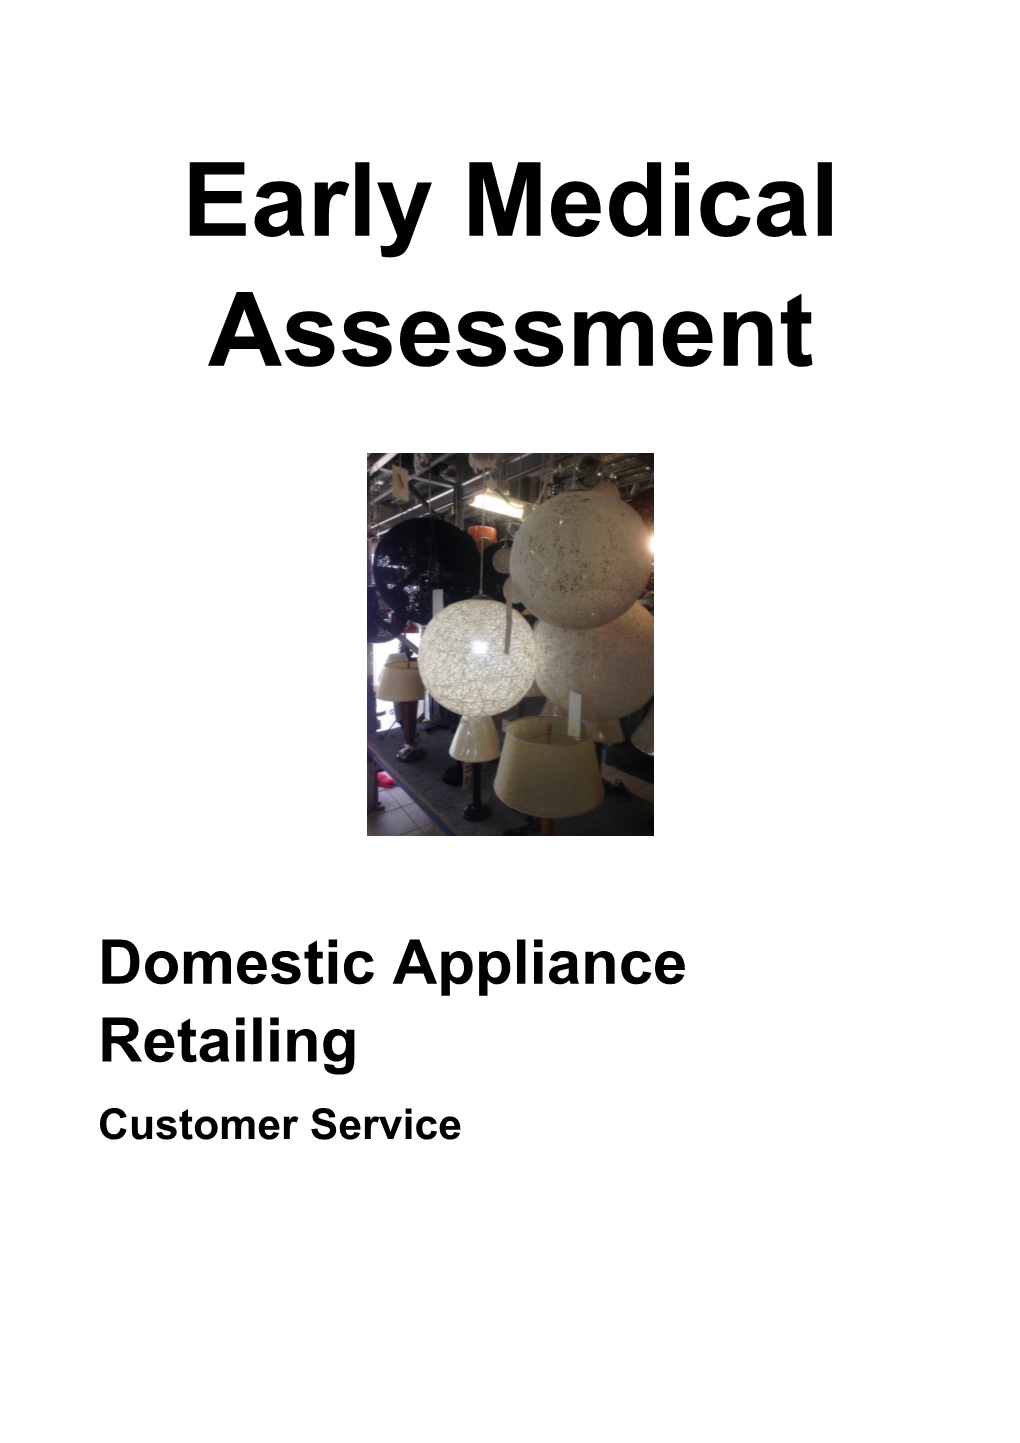 Domestic Appliance Retailing - Customer Service